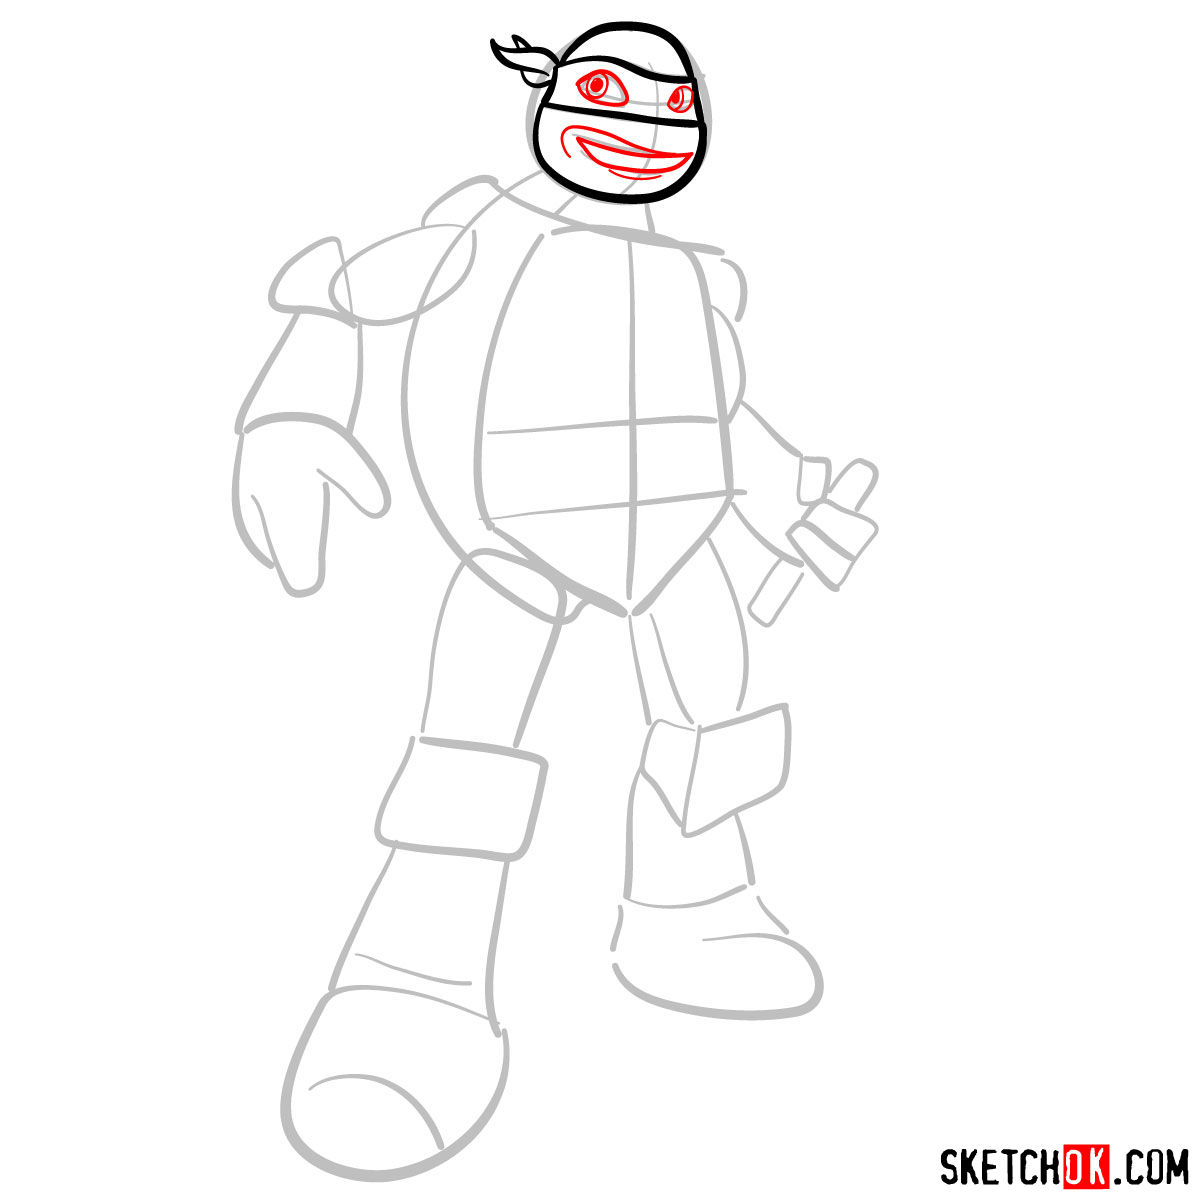 How to draw Michaelangelo ninja turtle cartoon style - step 04